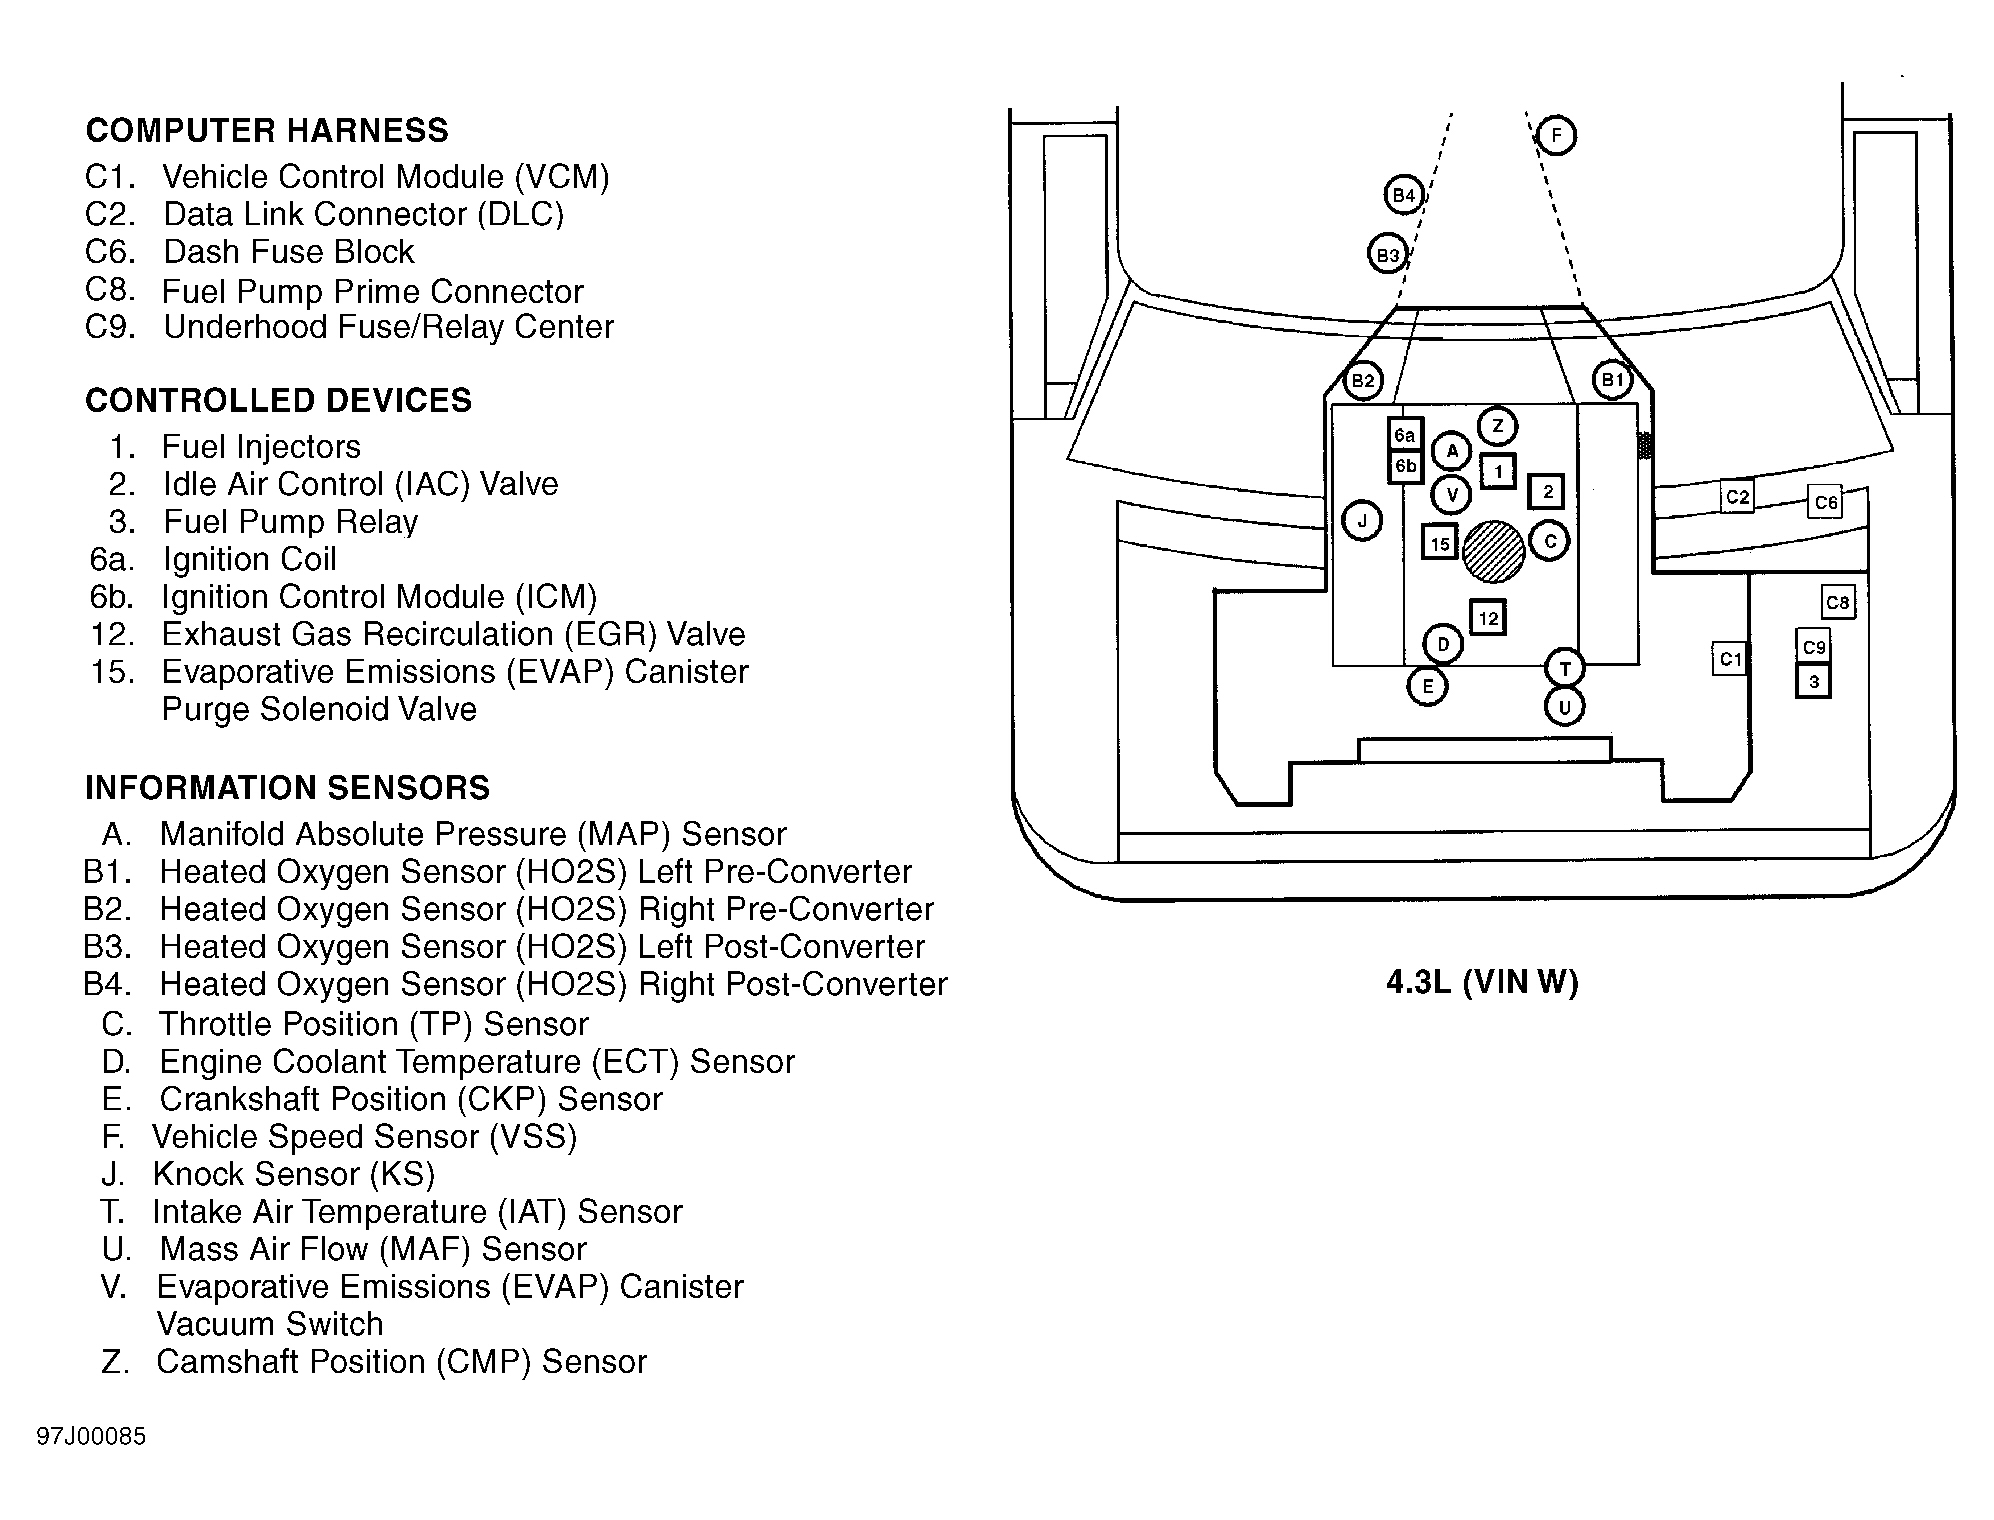 Chevrolet Cutaway P30 1997 - Component Locations -  Engine Compartment (4.3L VIN W)